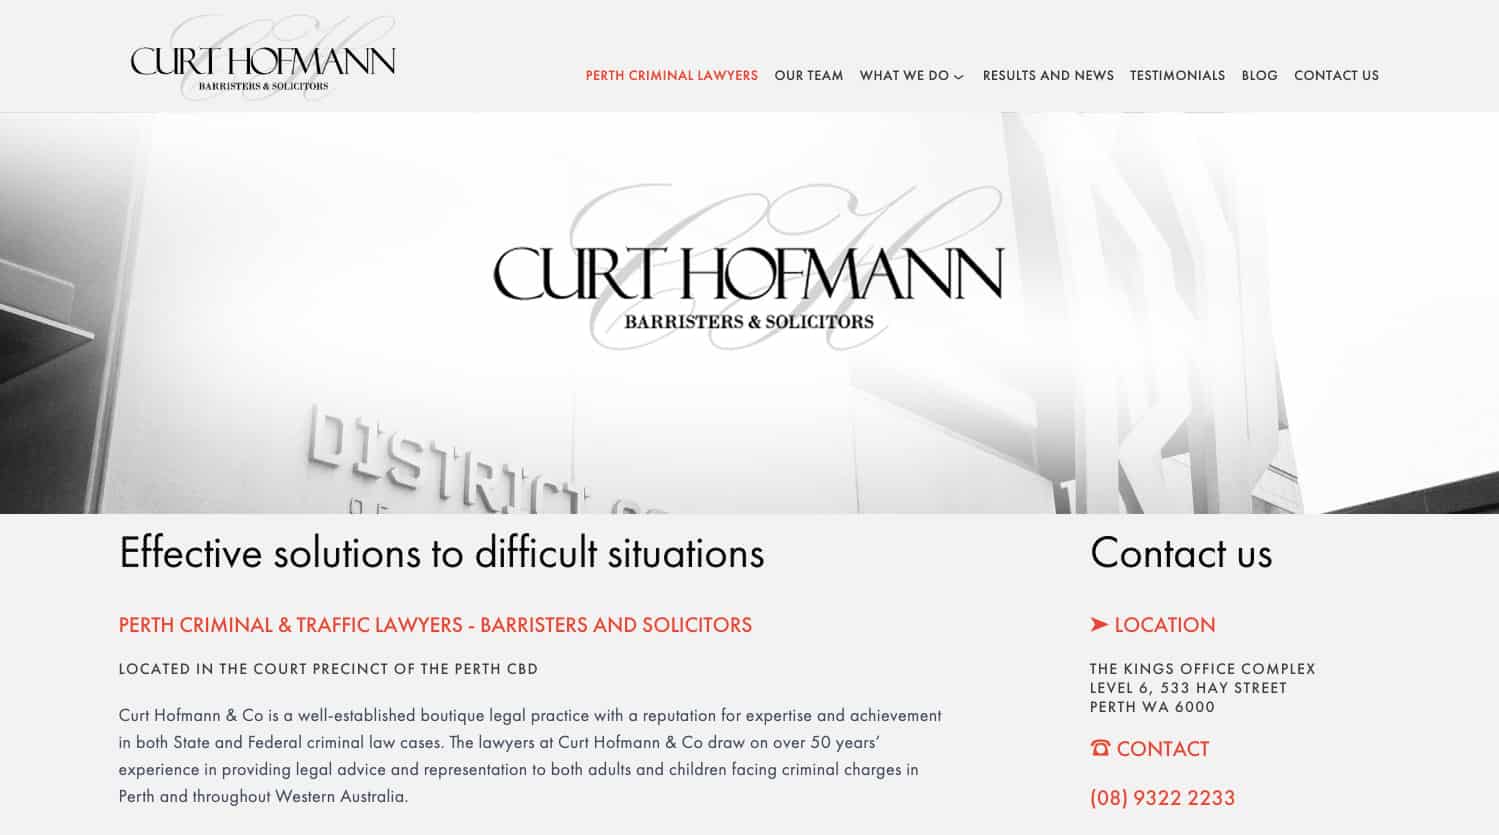 Curt Hofmann & Co